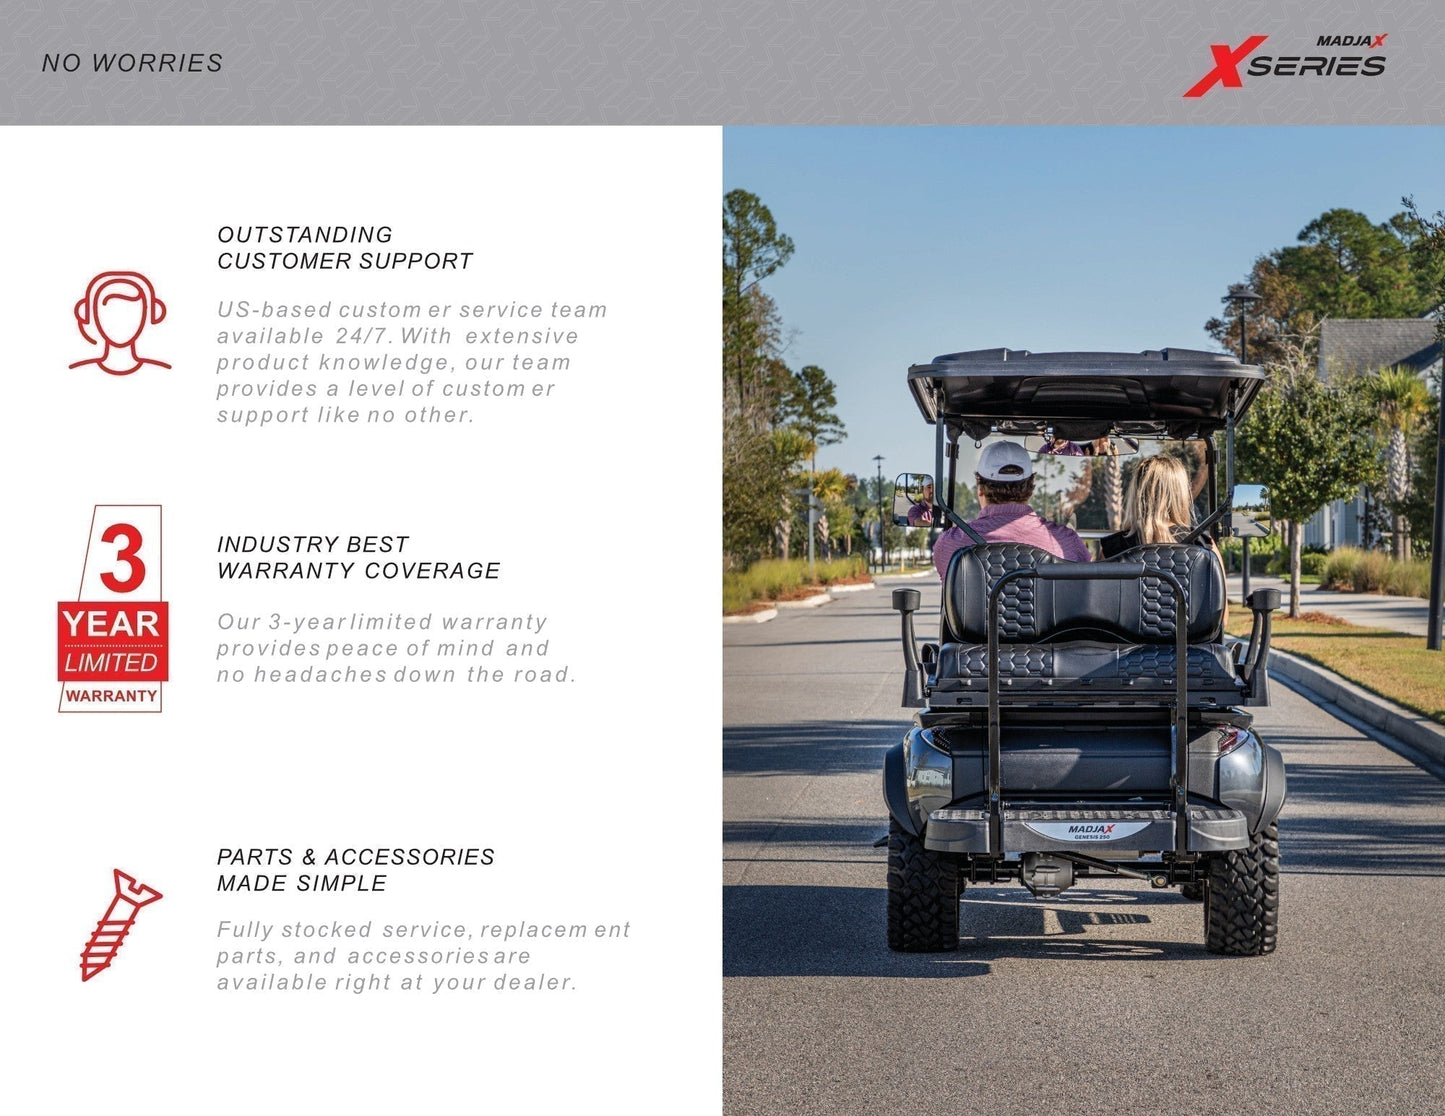 MADJAX X Series Storm 4 Passenger Lithium Lifted Golf Cart - Sea Foam #1088 *SOLD*